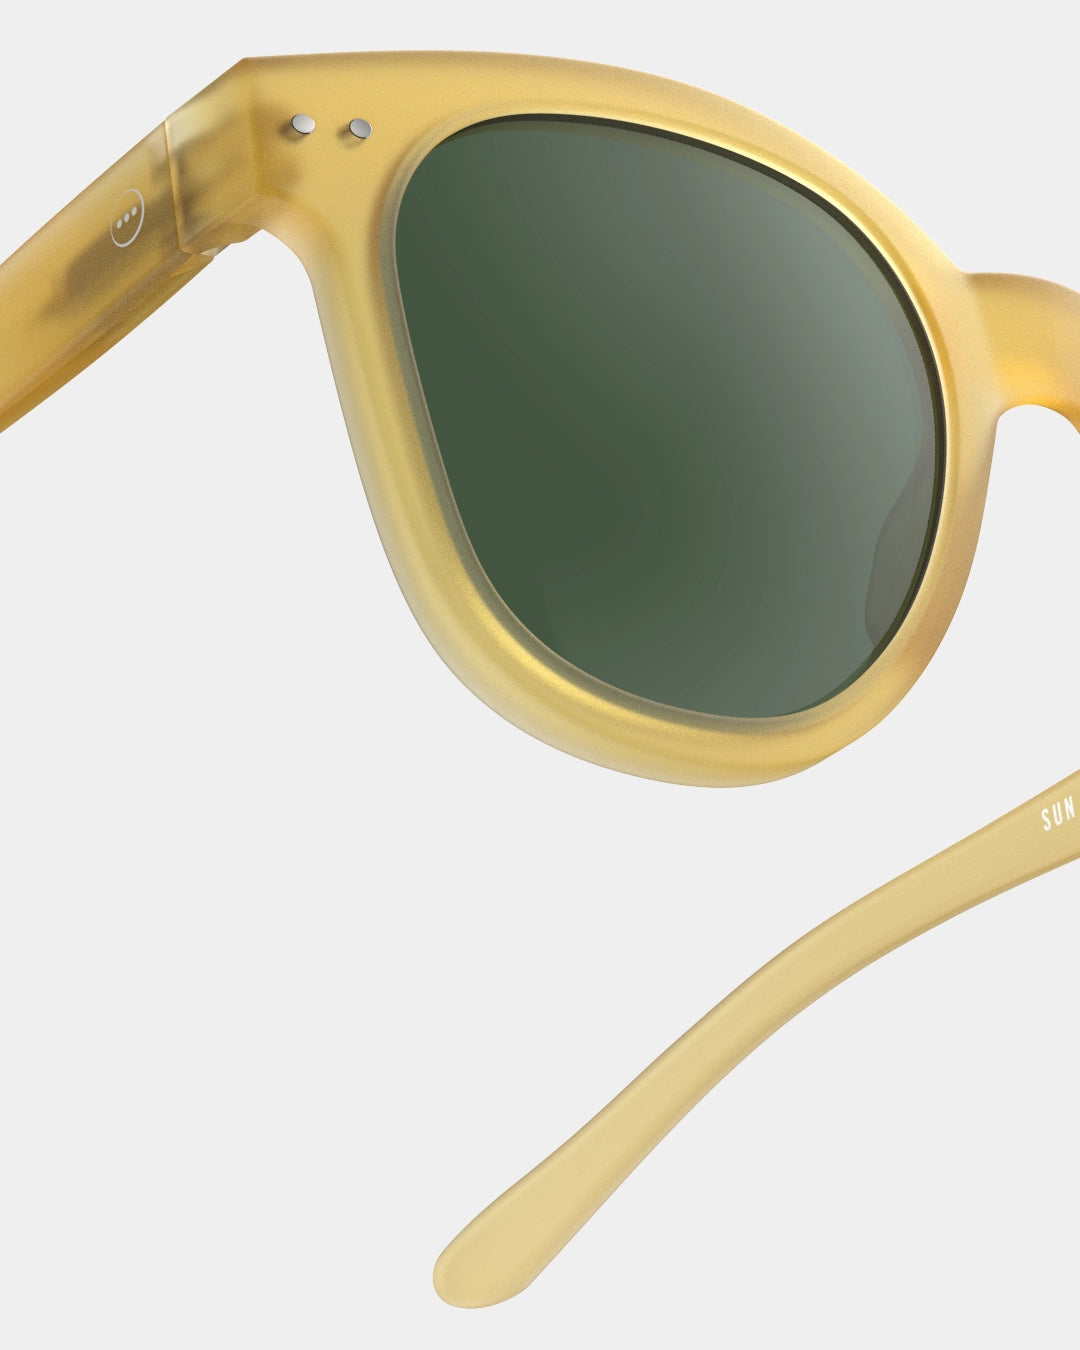 Izipizi - Damen N Sonnenbrille groß transparent gelb